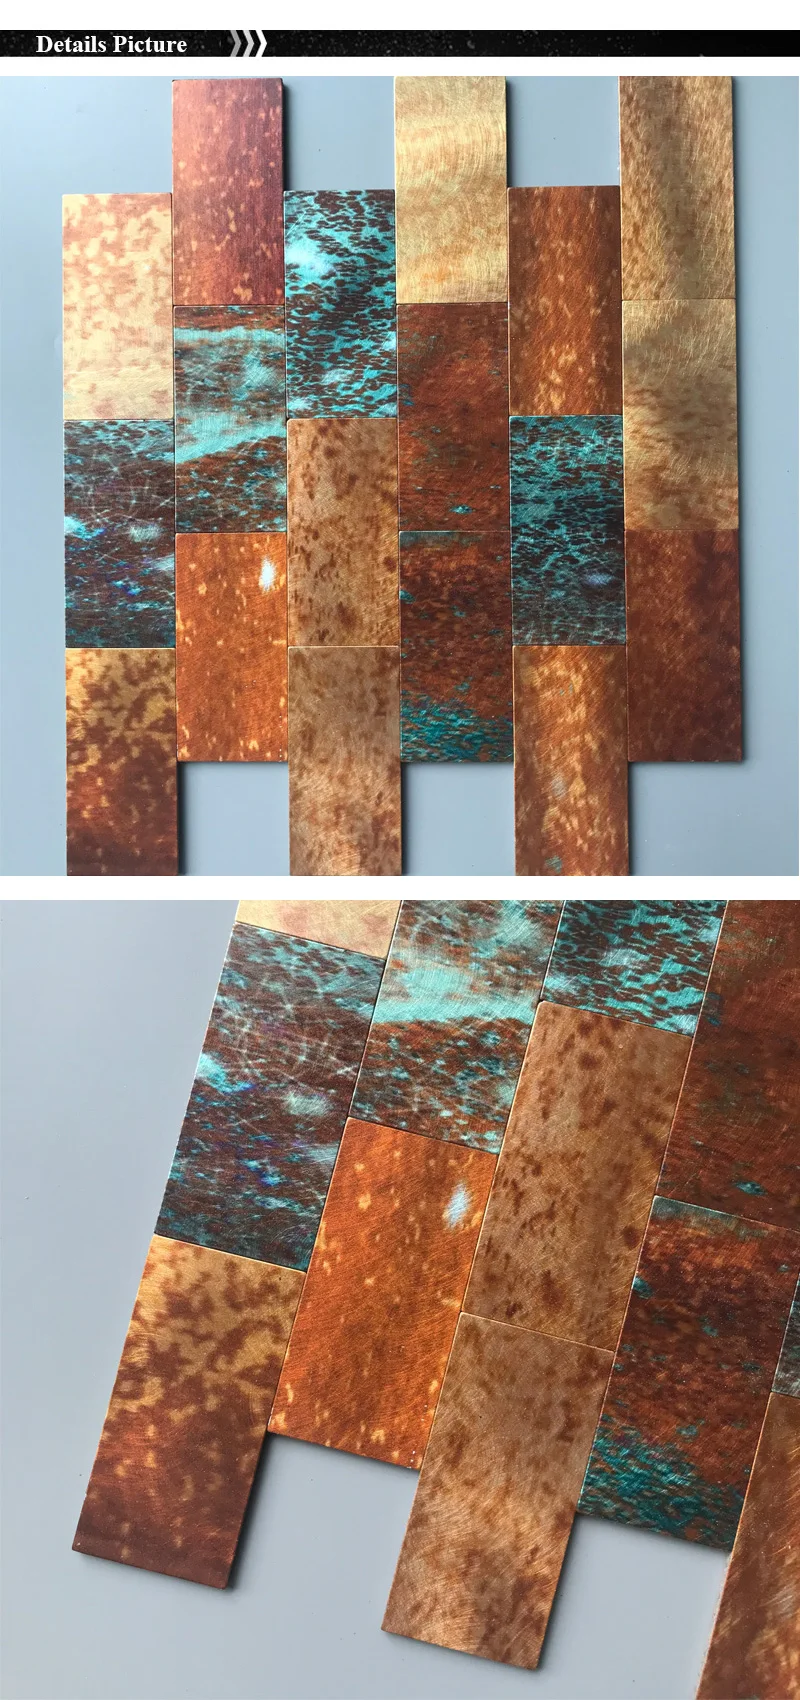 Foshan self adhesive long strip waterproof pvc panels mosaic tile backsplash wall sticker